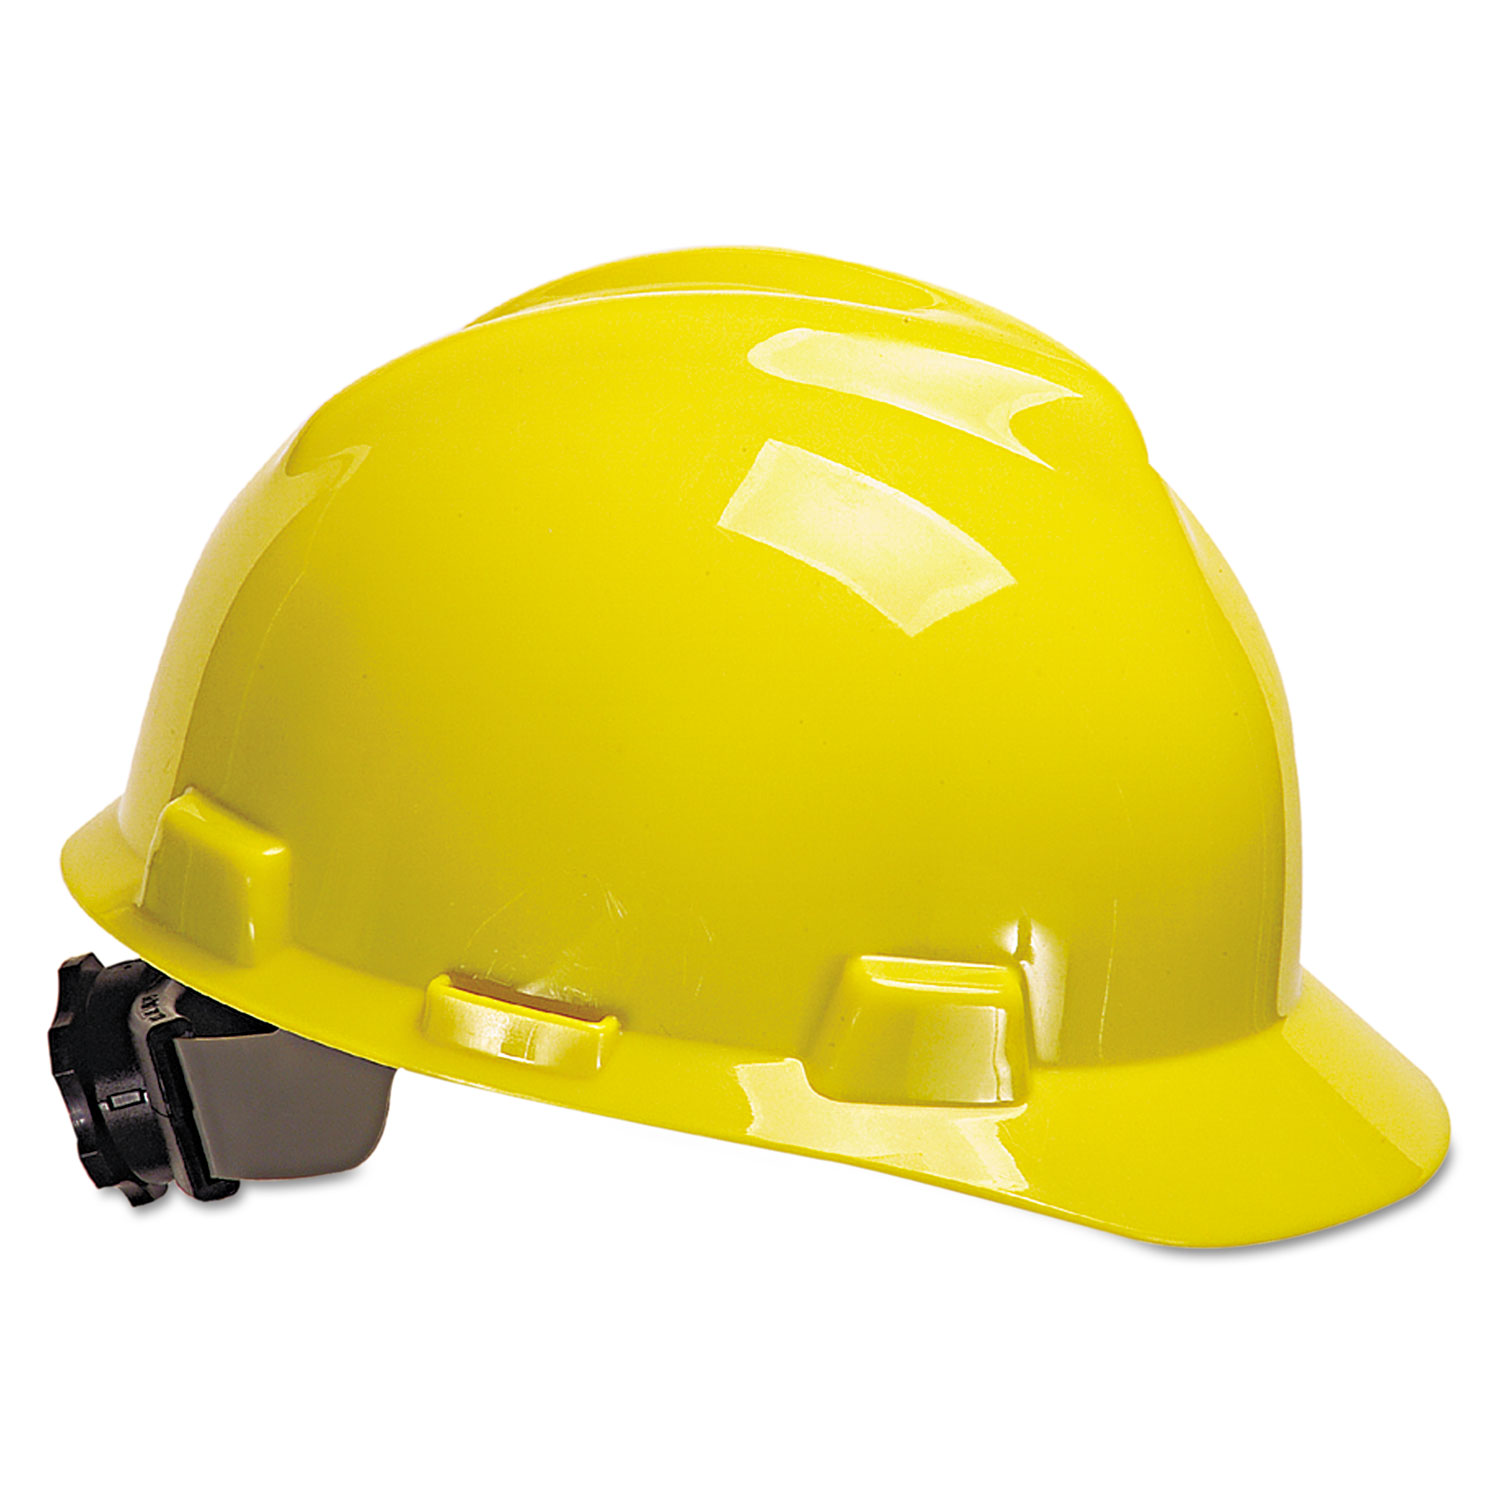 V-Gard Hard Hats, Ratchet Suspension, Size 6 1/2 - 8, Yellow